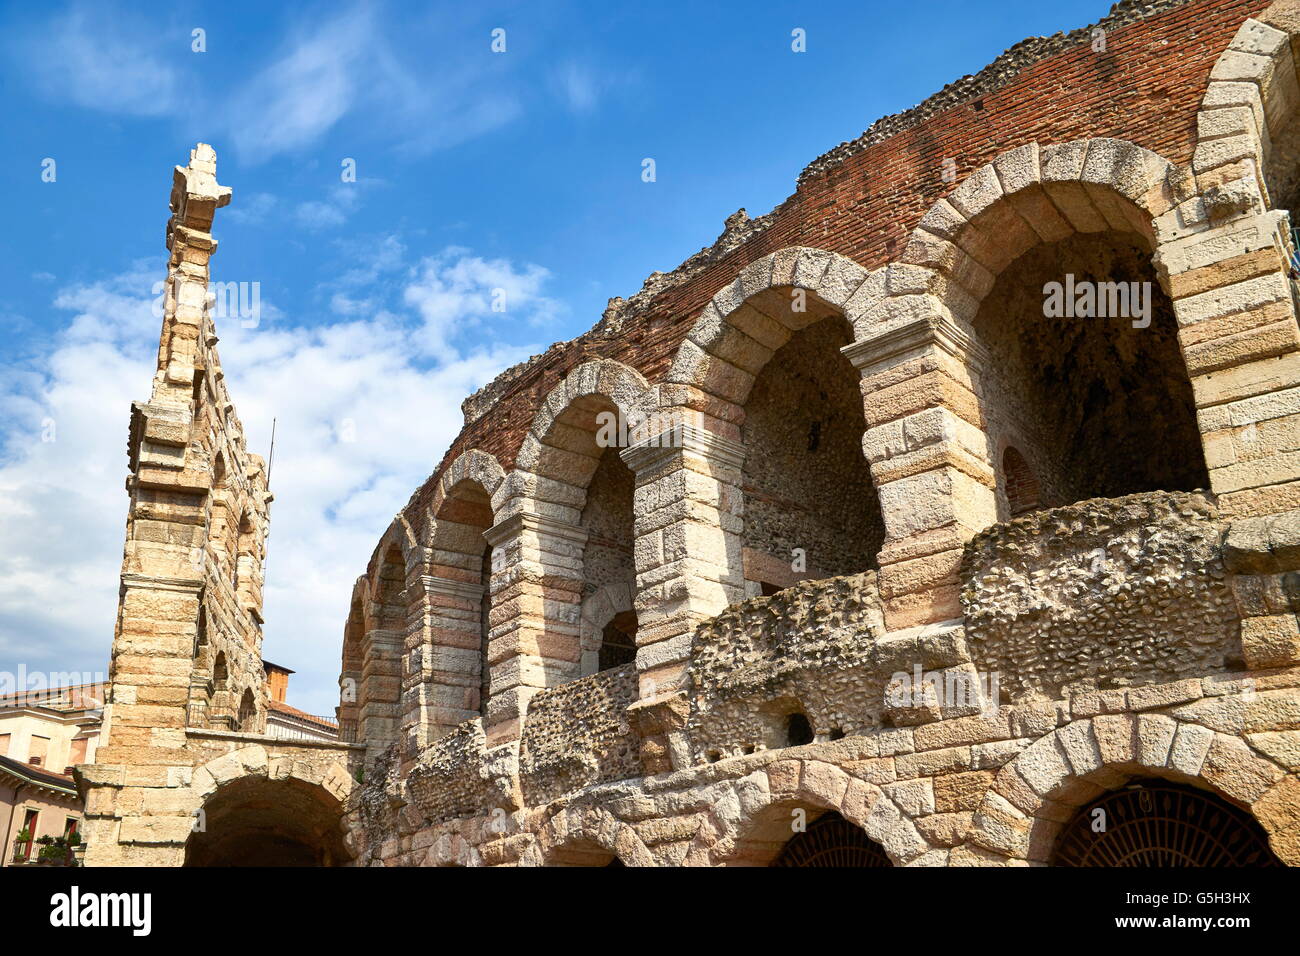 The Arena (amphiteater), Piazza Bra, Verona old town, Veneto region, Italy Stock Photo